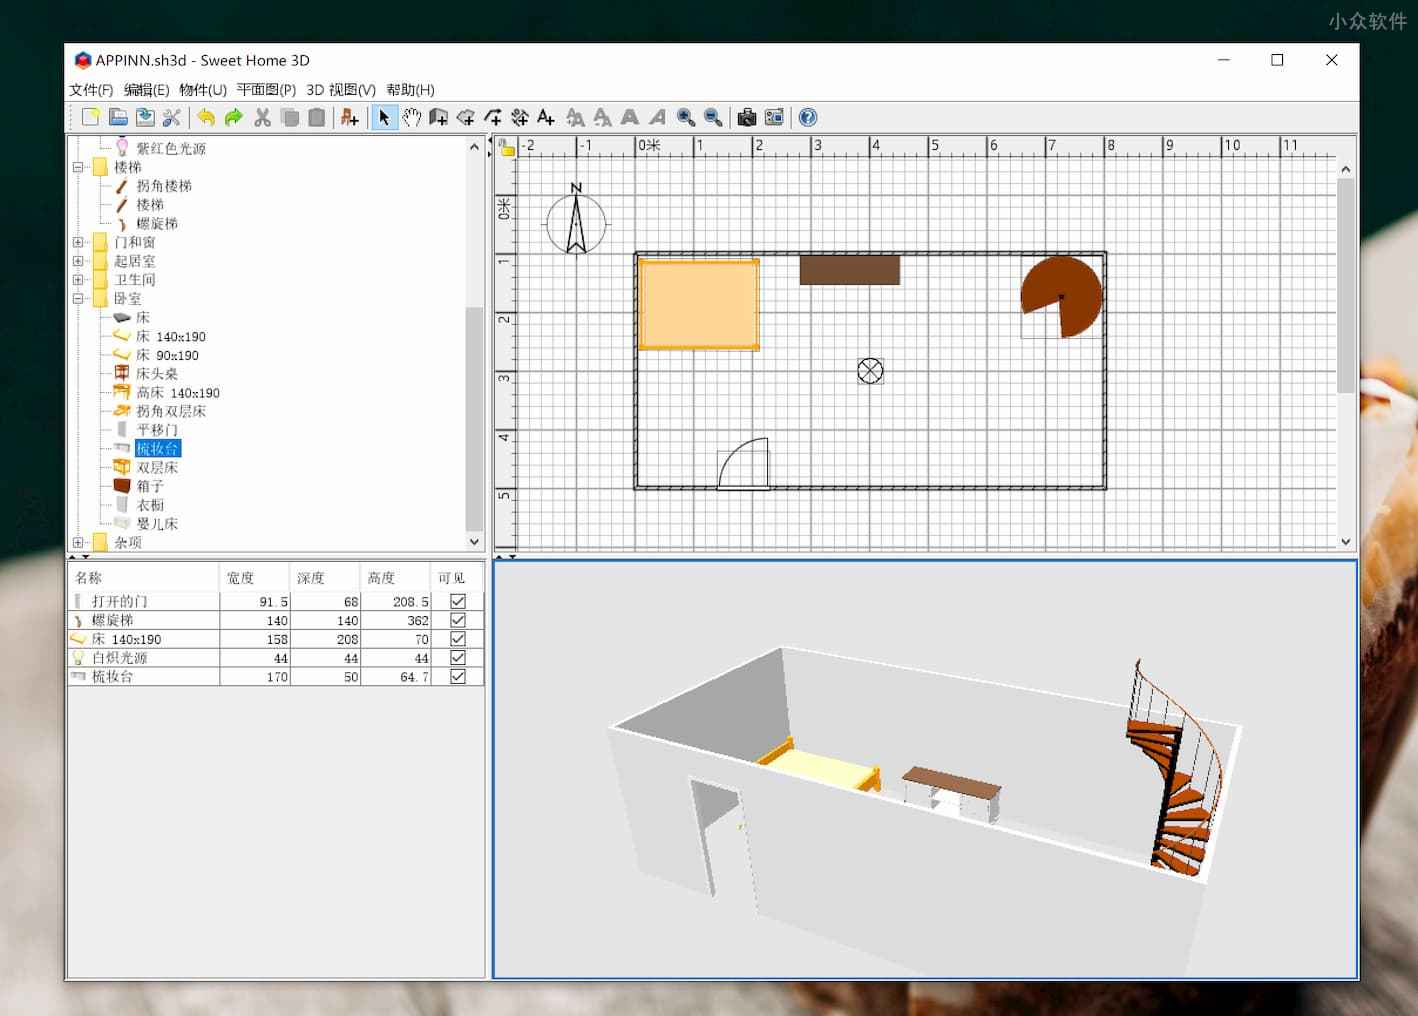 Sweet Home 3D - 拖拽就能创建 3D 效果的装修图，免费开源很好用 2